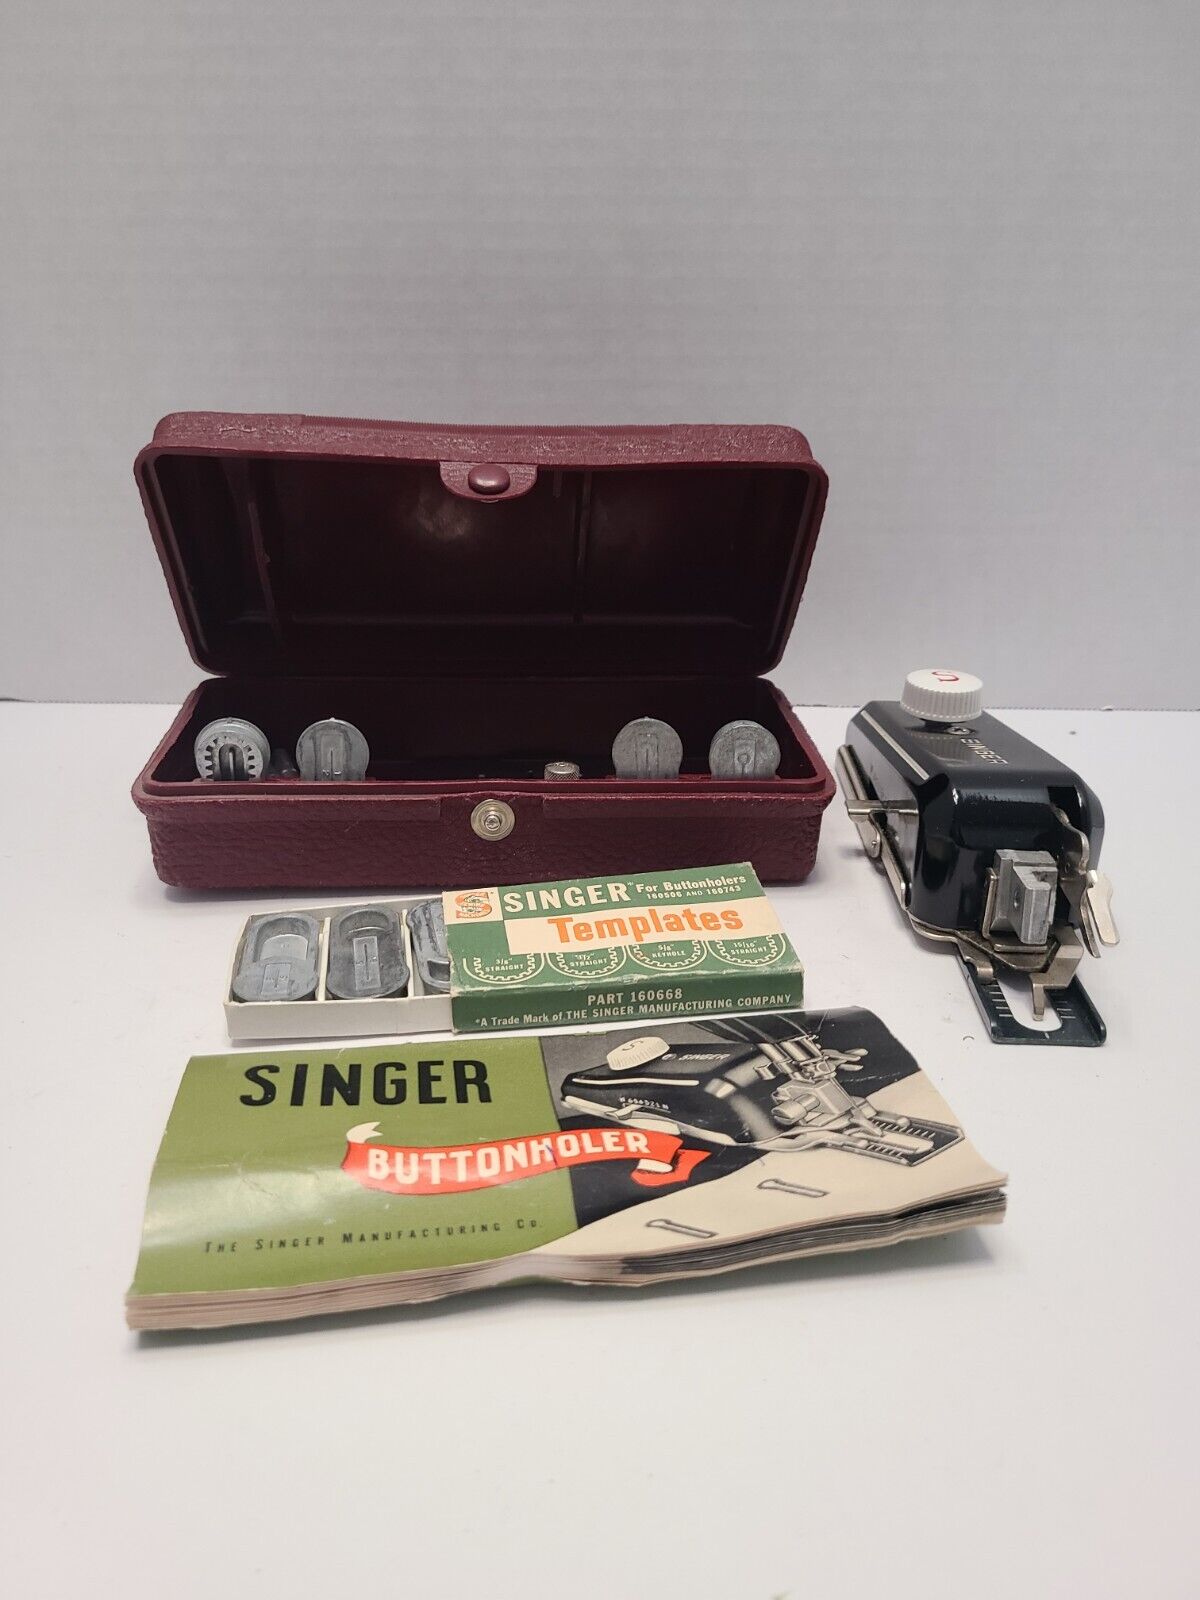 1952 Singer Slant Shank Buttonholer in Burgundy Case # 160743 Templates & Instru